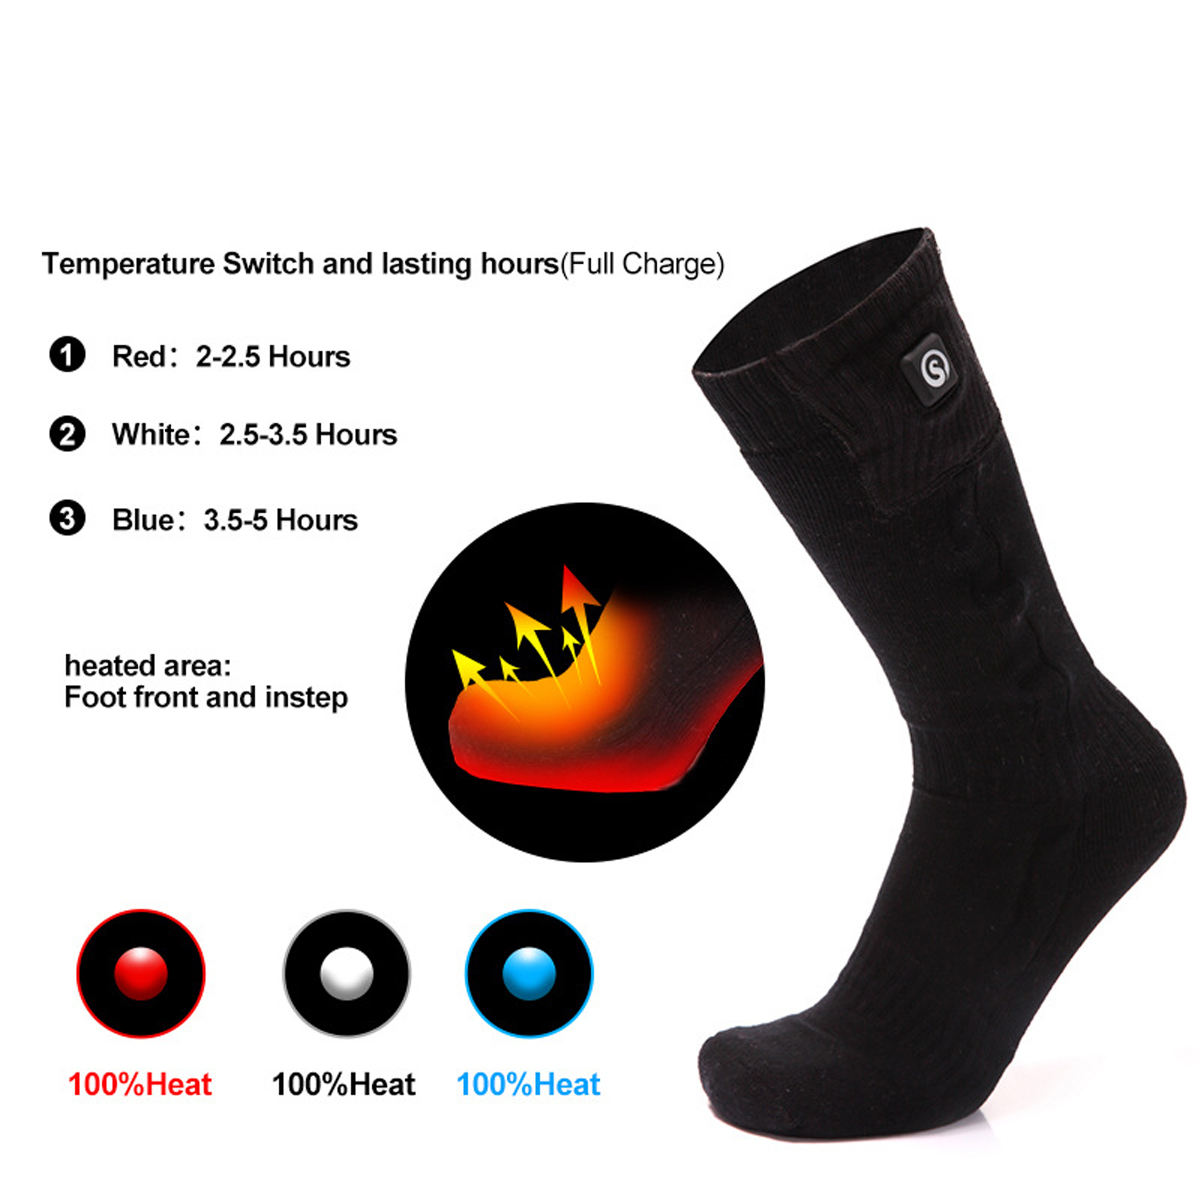 SAVIOR-74V-2200mAh-Electric-Heated-Socks-Rechargeable-Battery-Feet-Warmer-For-Skiing-1425472-5